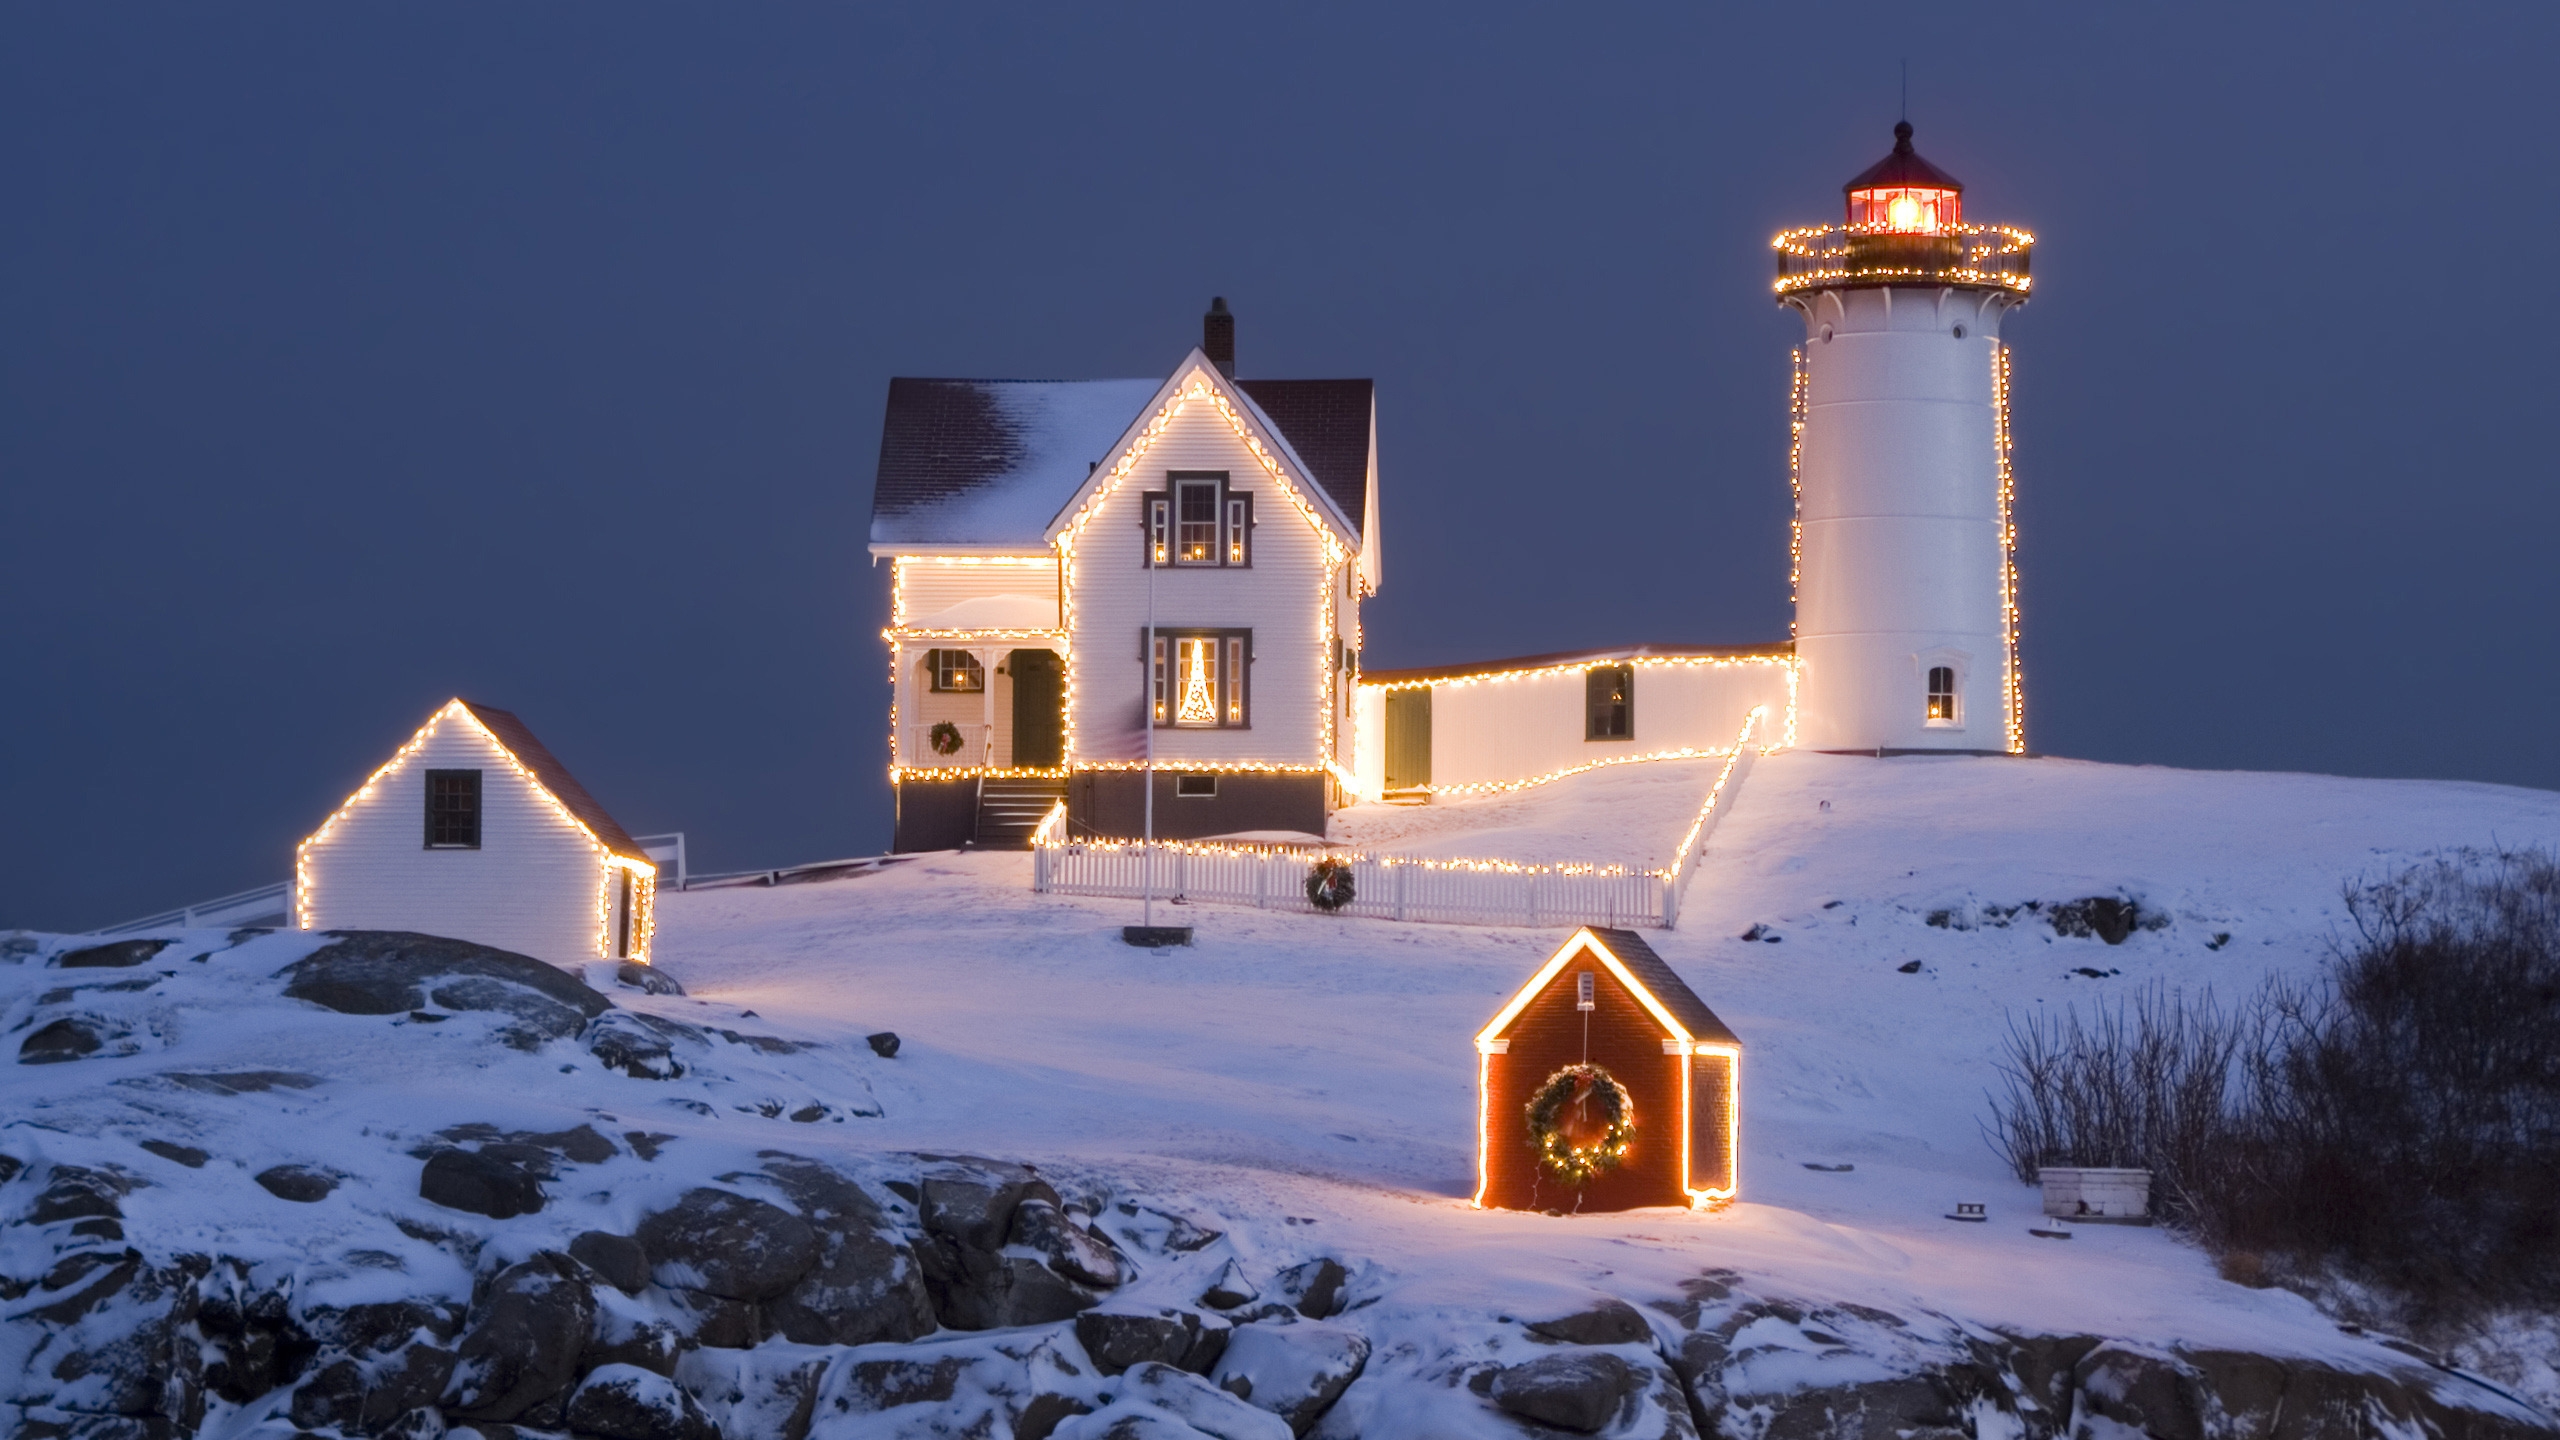 Christmas Lighthouse for 2560x1440 HDTV resolution